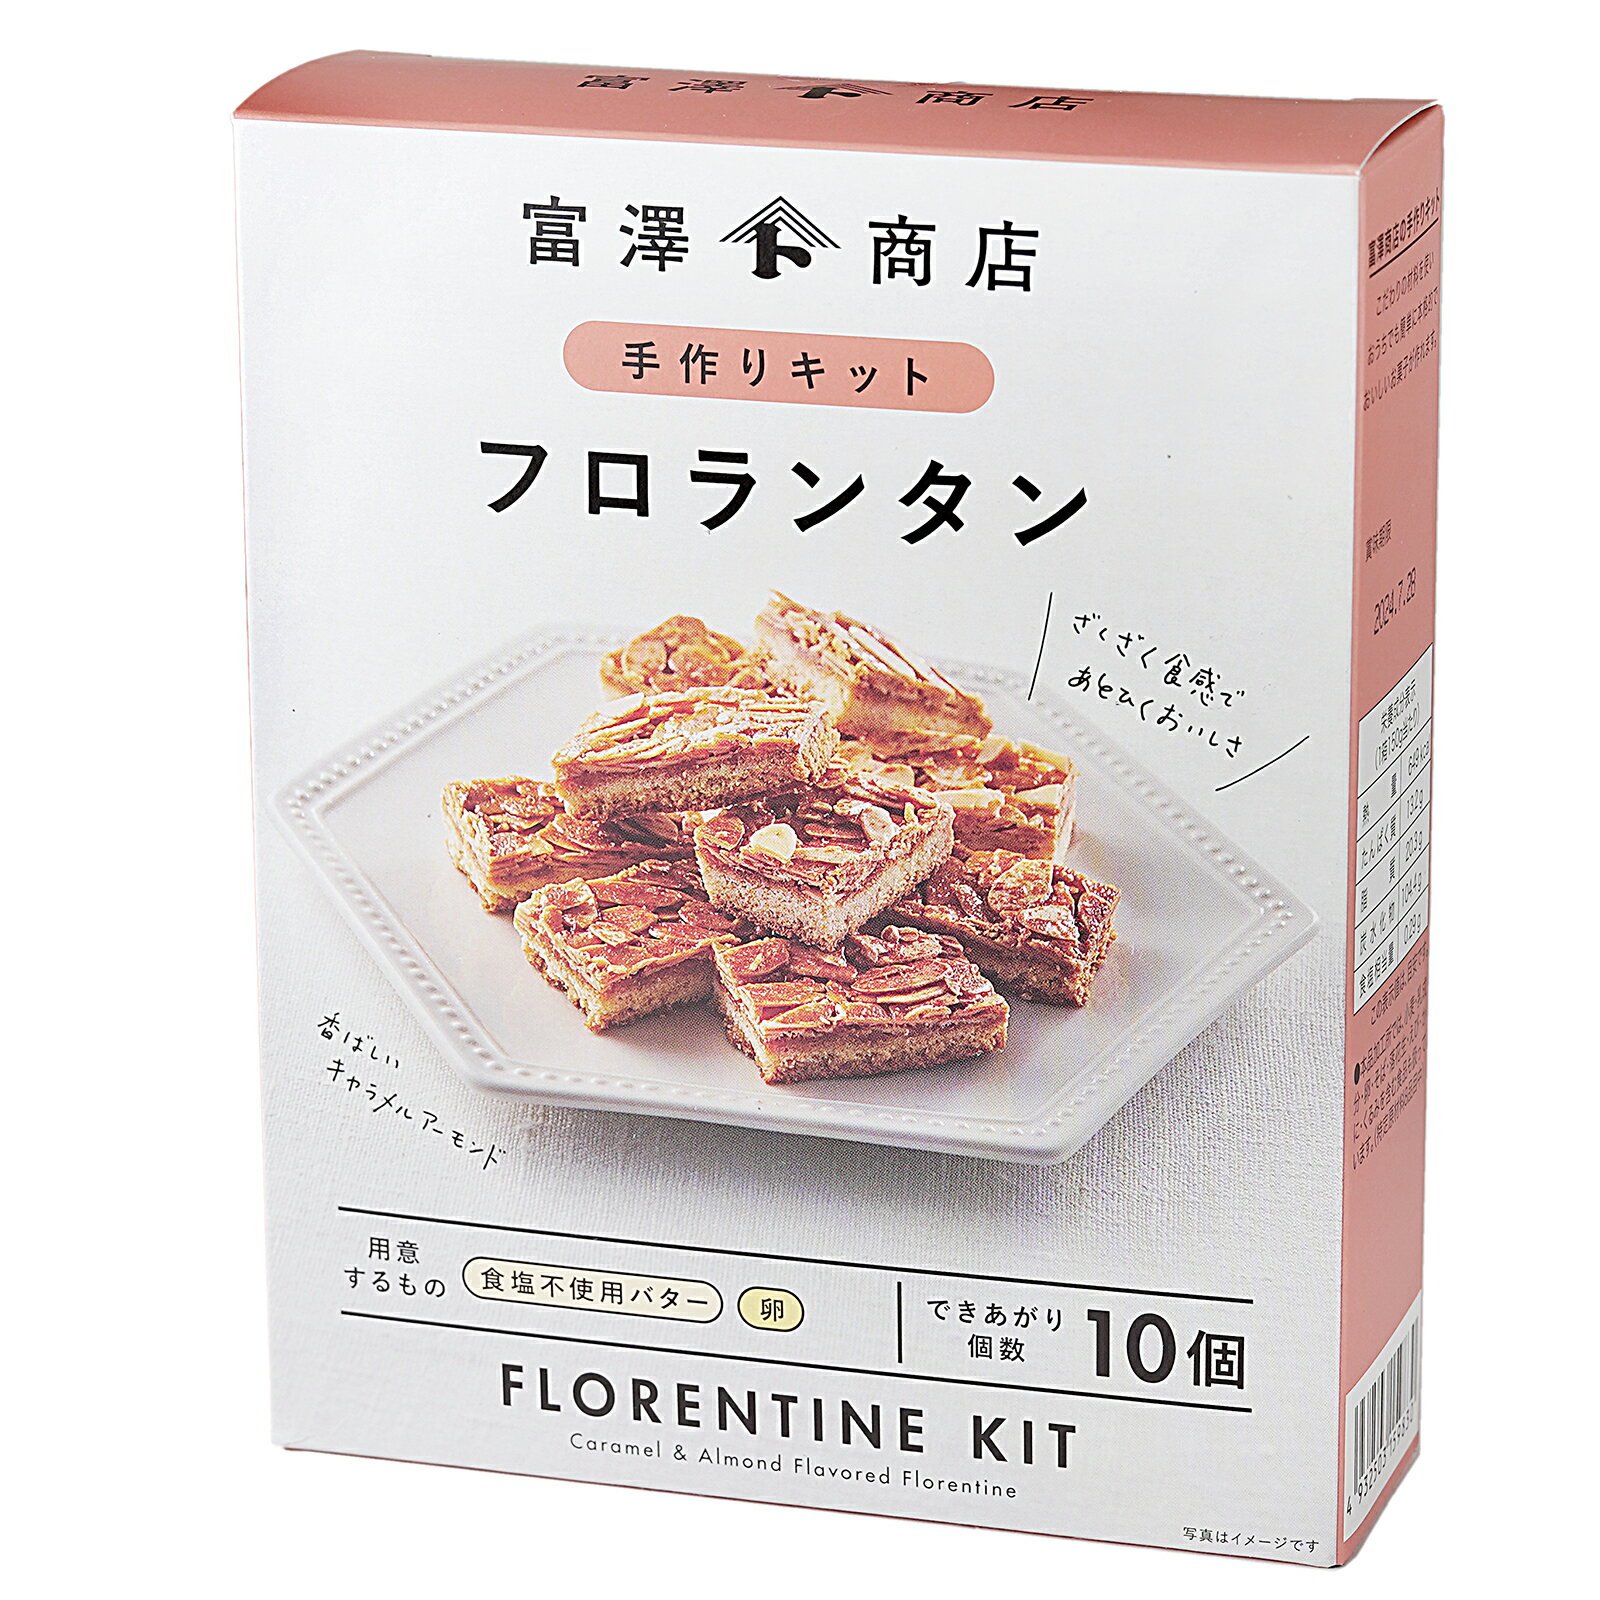 TOMIZ手作りキット フロランタン 1セット 富澤商店 お菓子作りセット 手作りキット